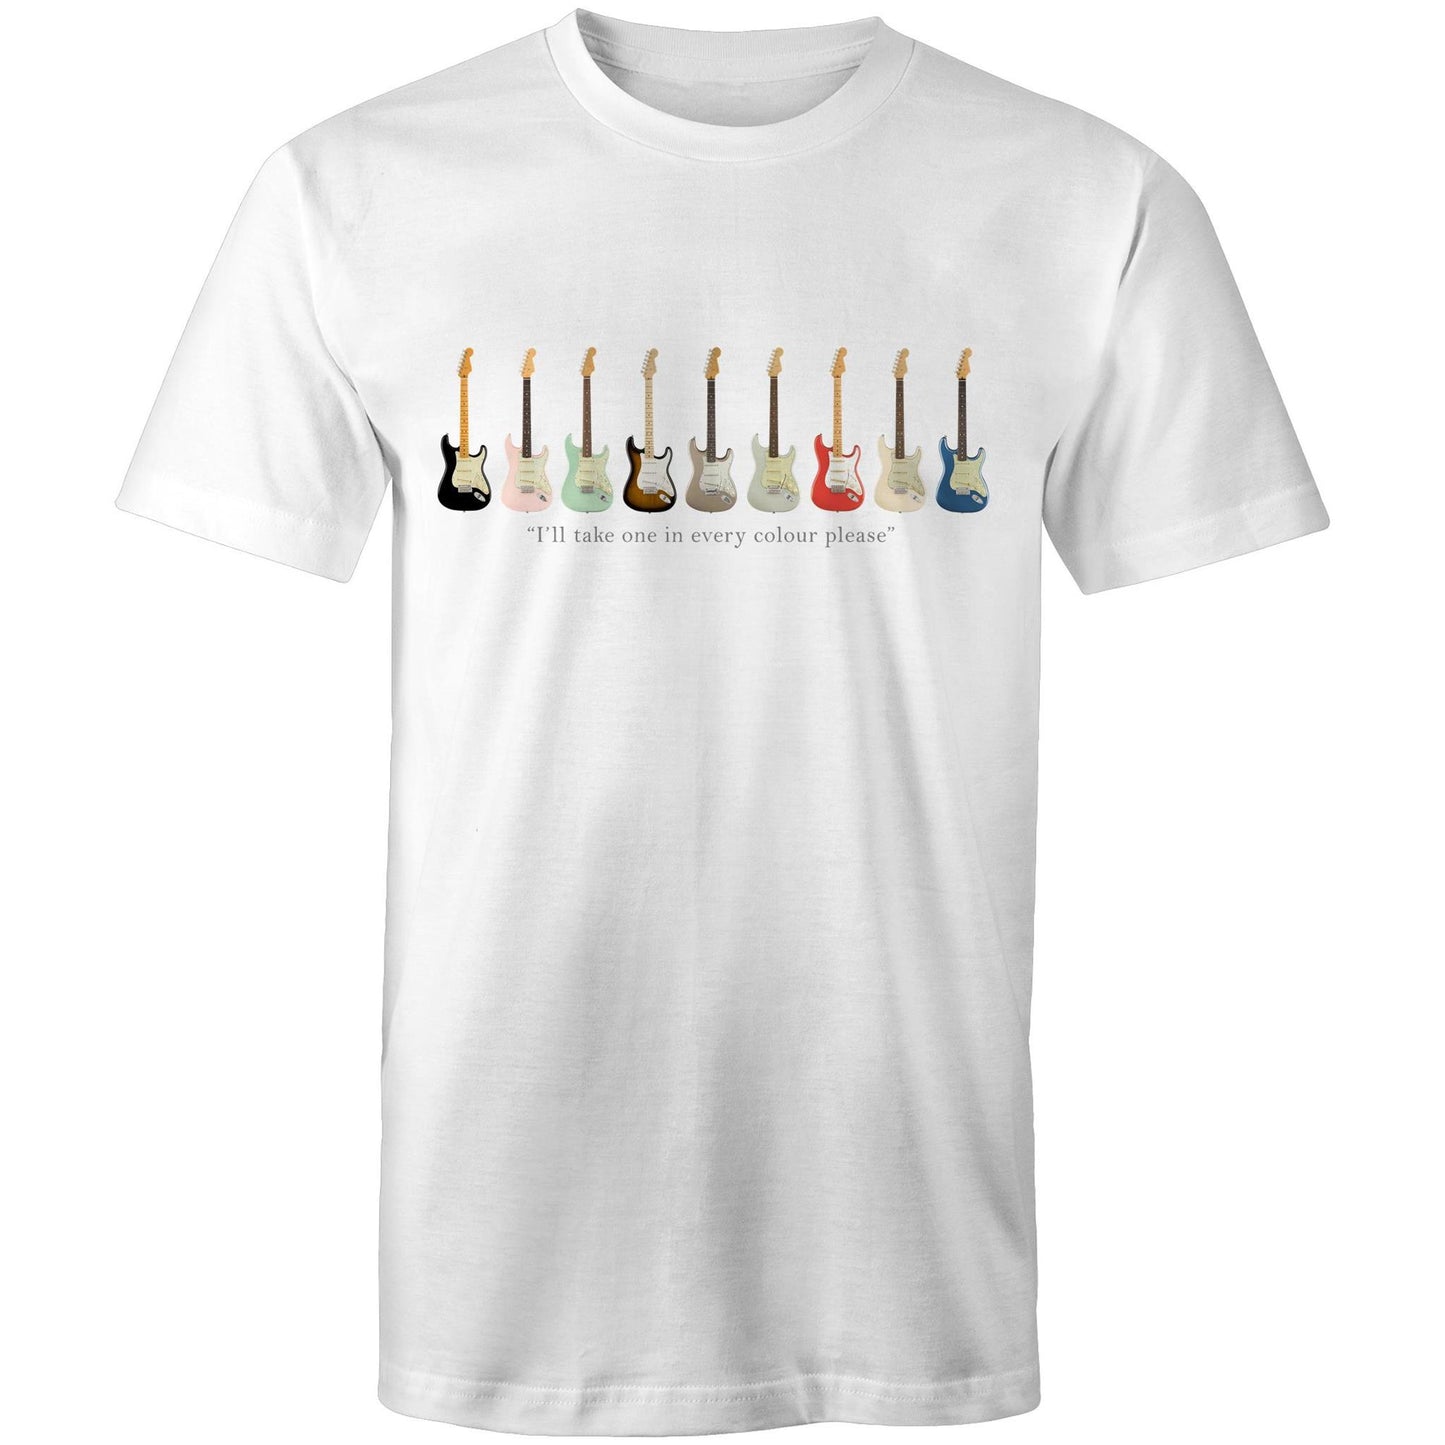 Guitars In Every Colour - Mens T-Shirt White Mens T-shirt Music